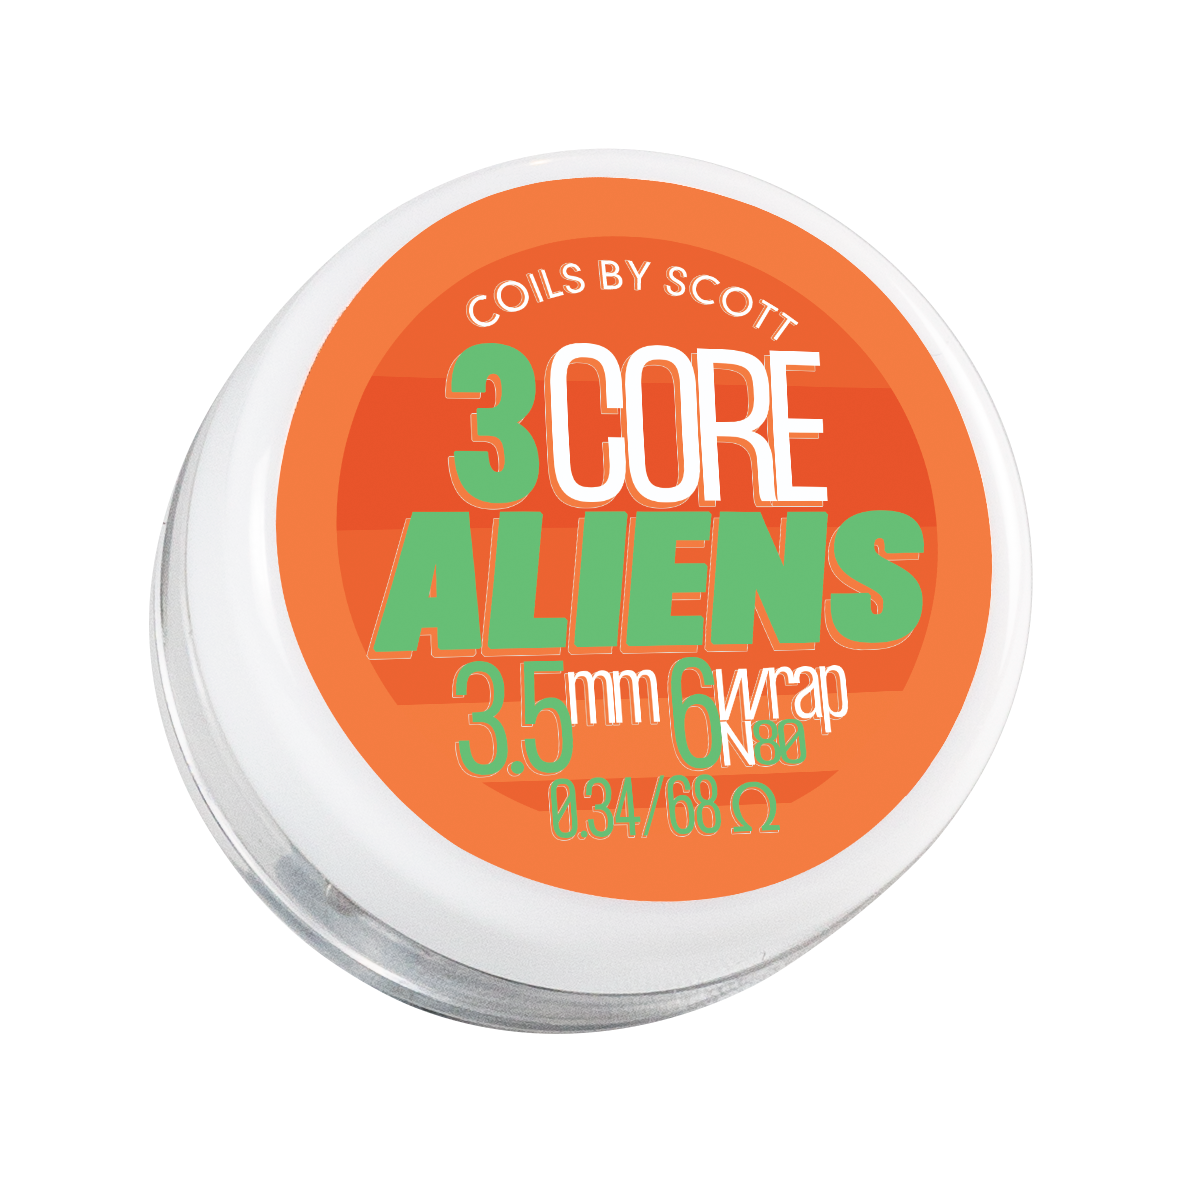 0.34 3 Core Aliens